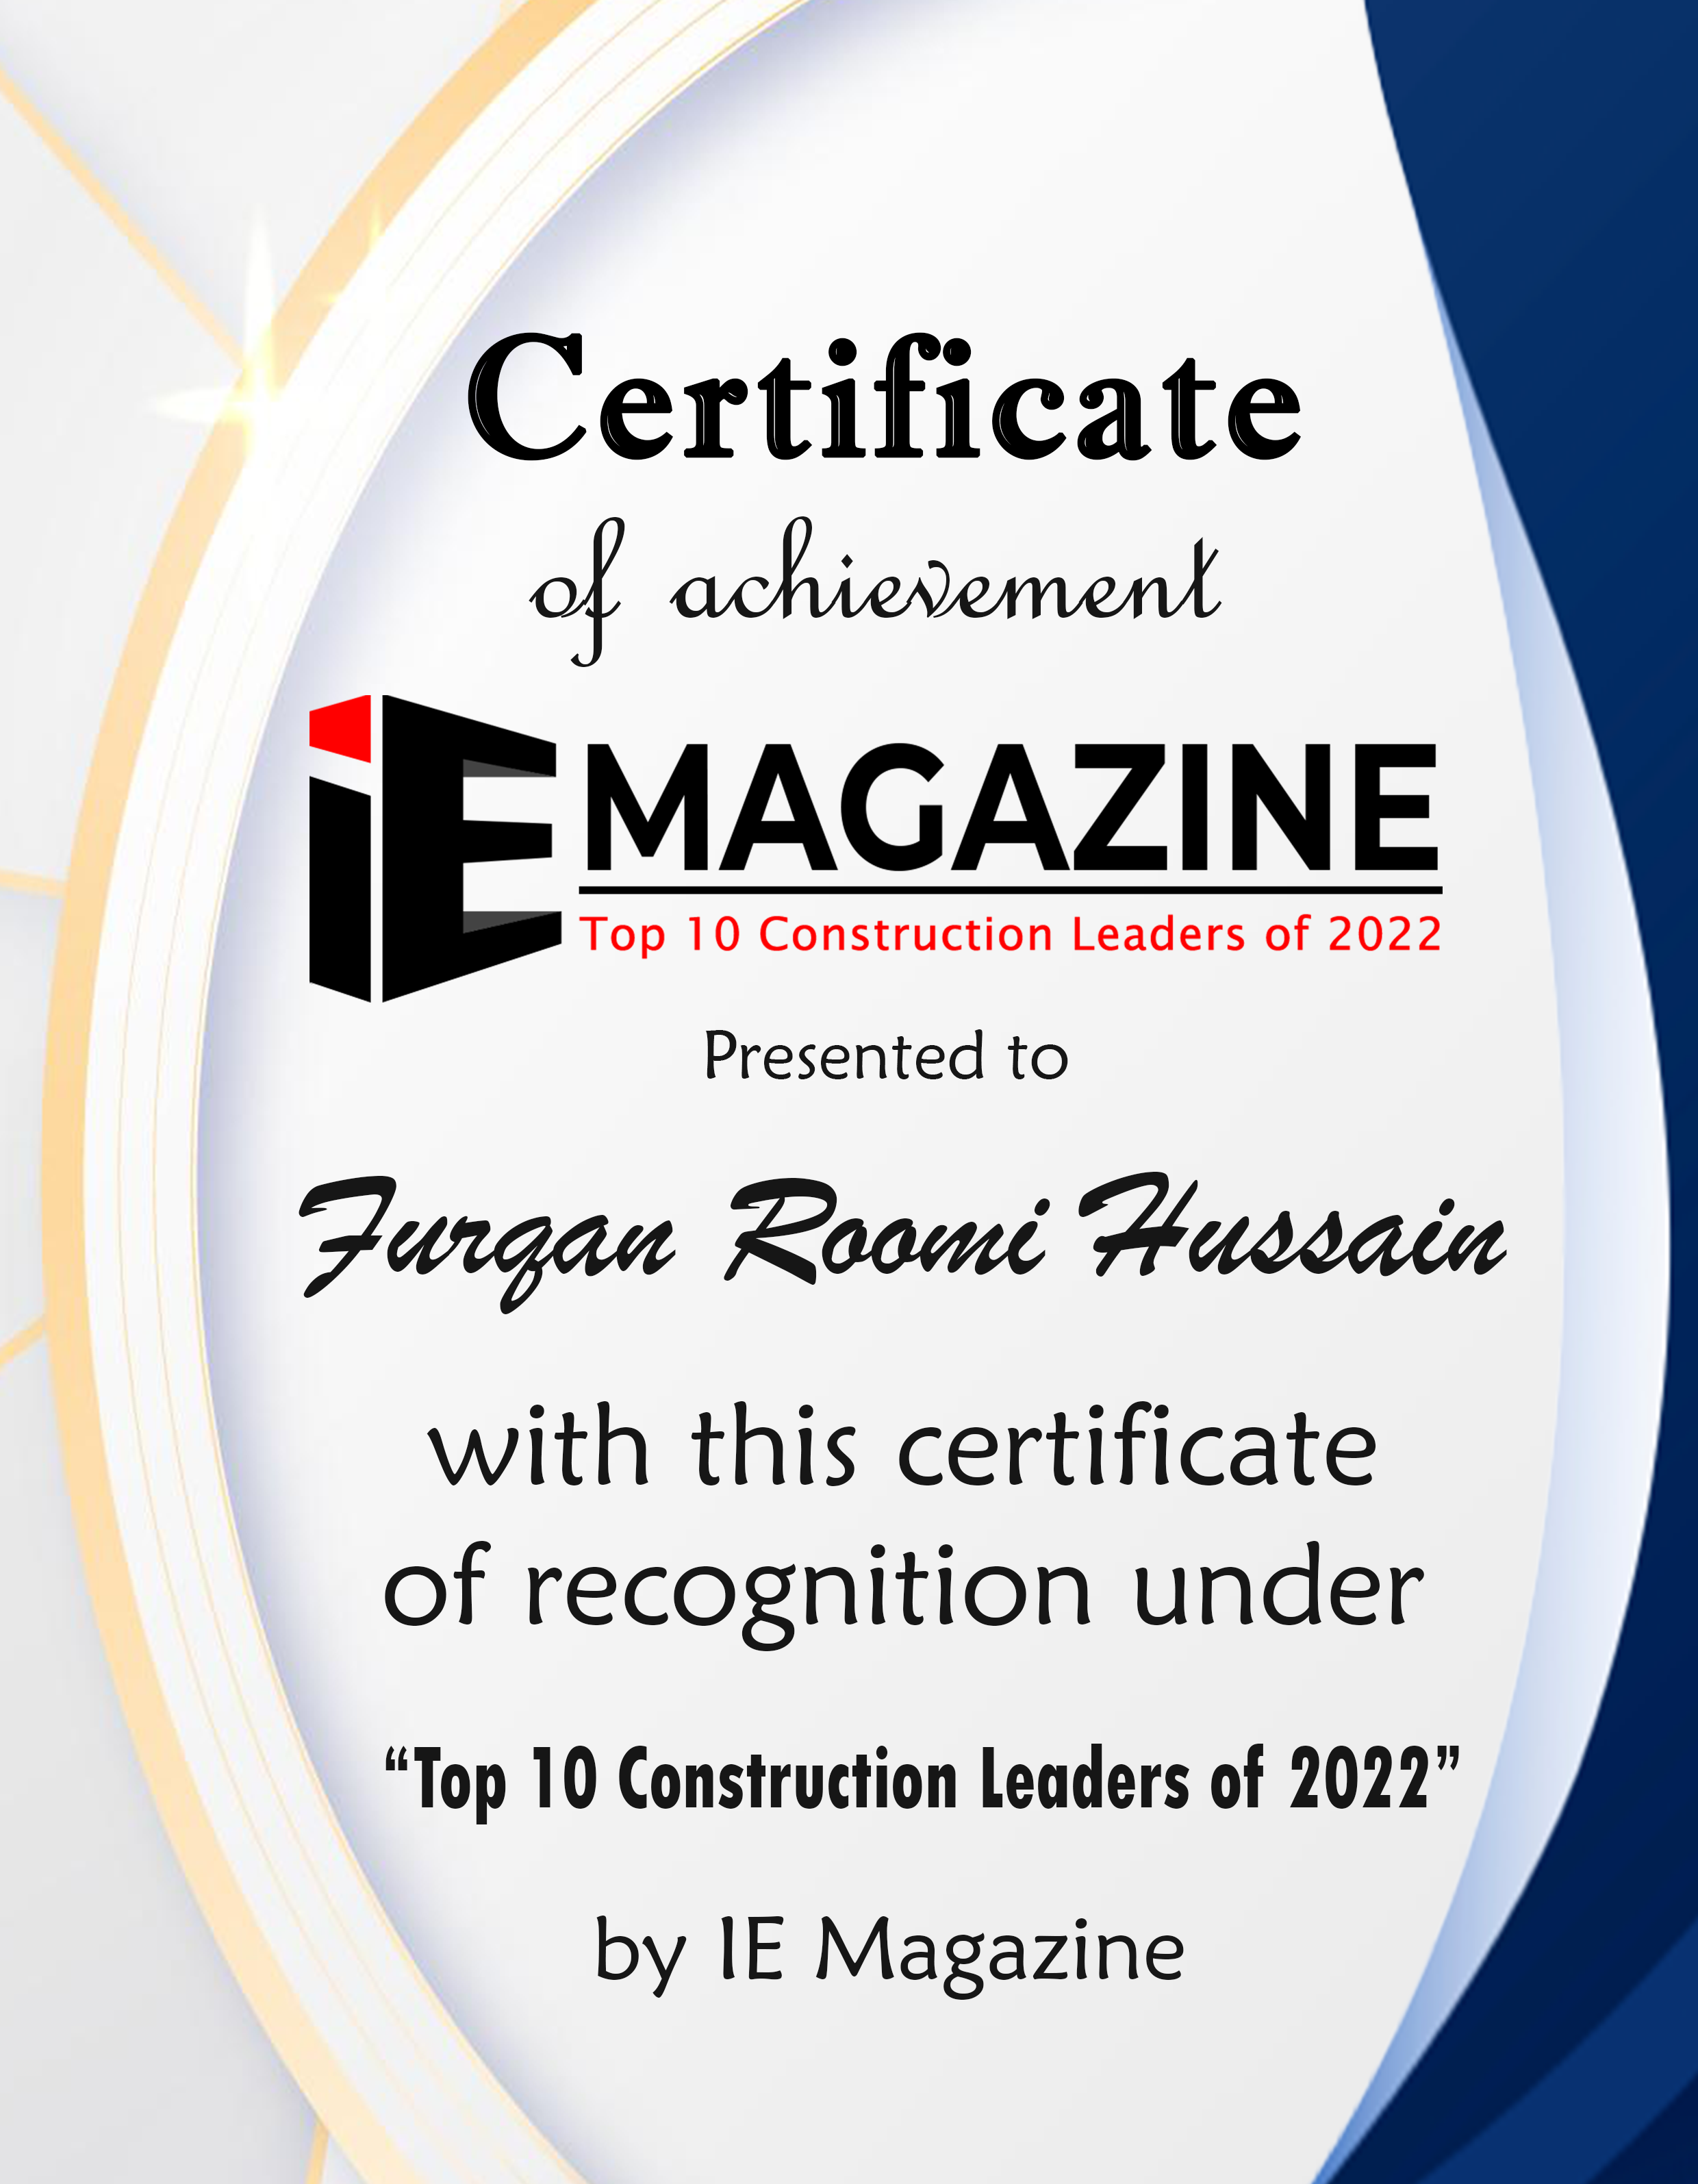 Furqan Roomi Hussain, CEO of Roomi Group Corporation Certificate